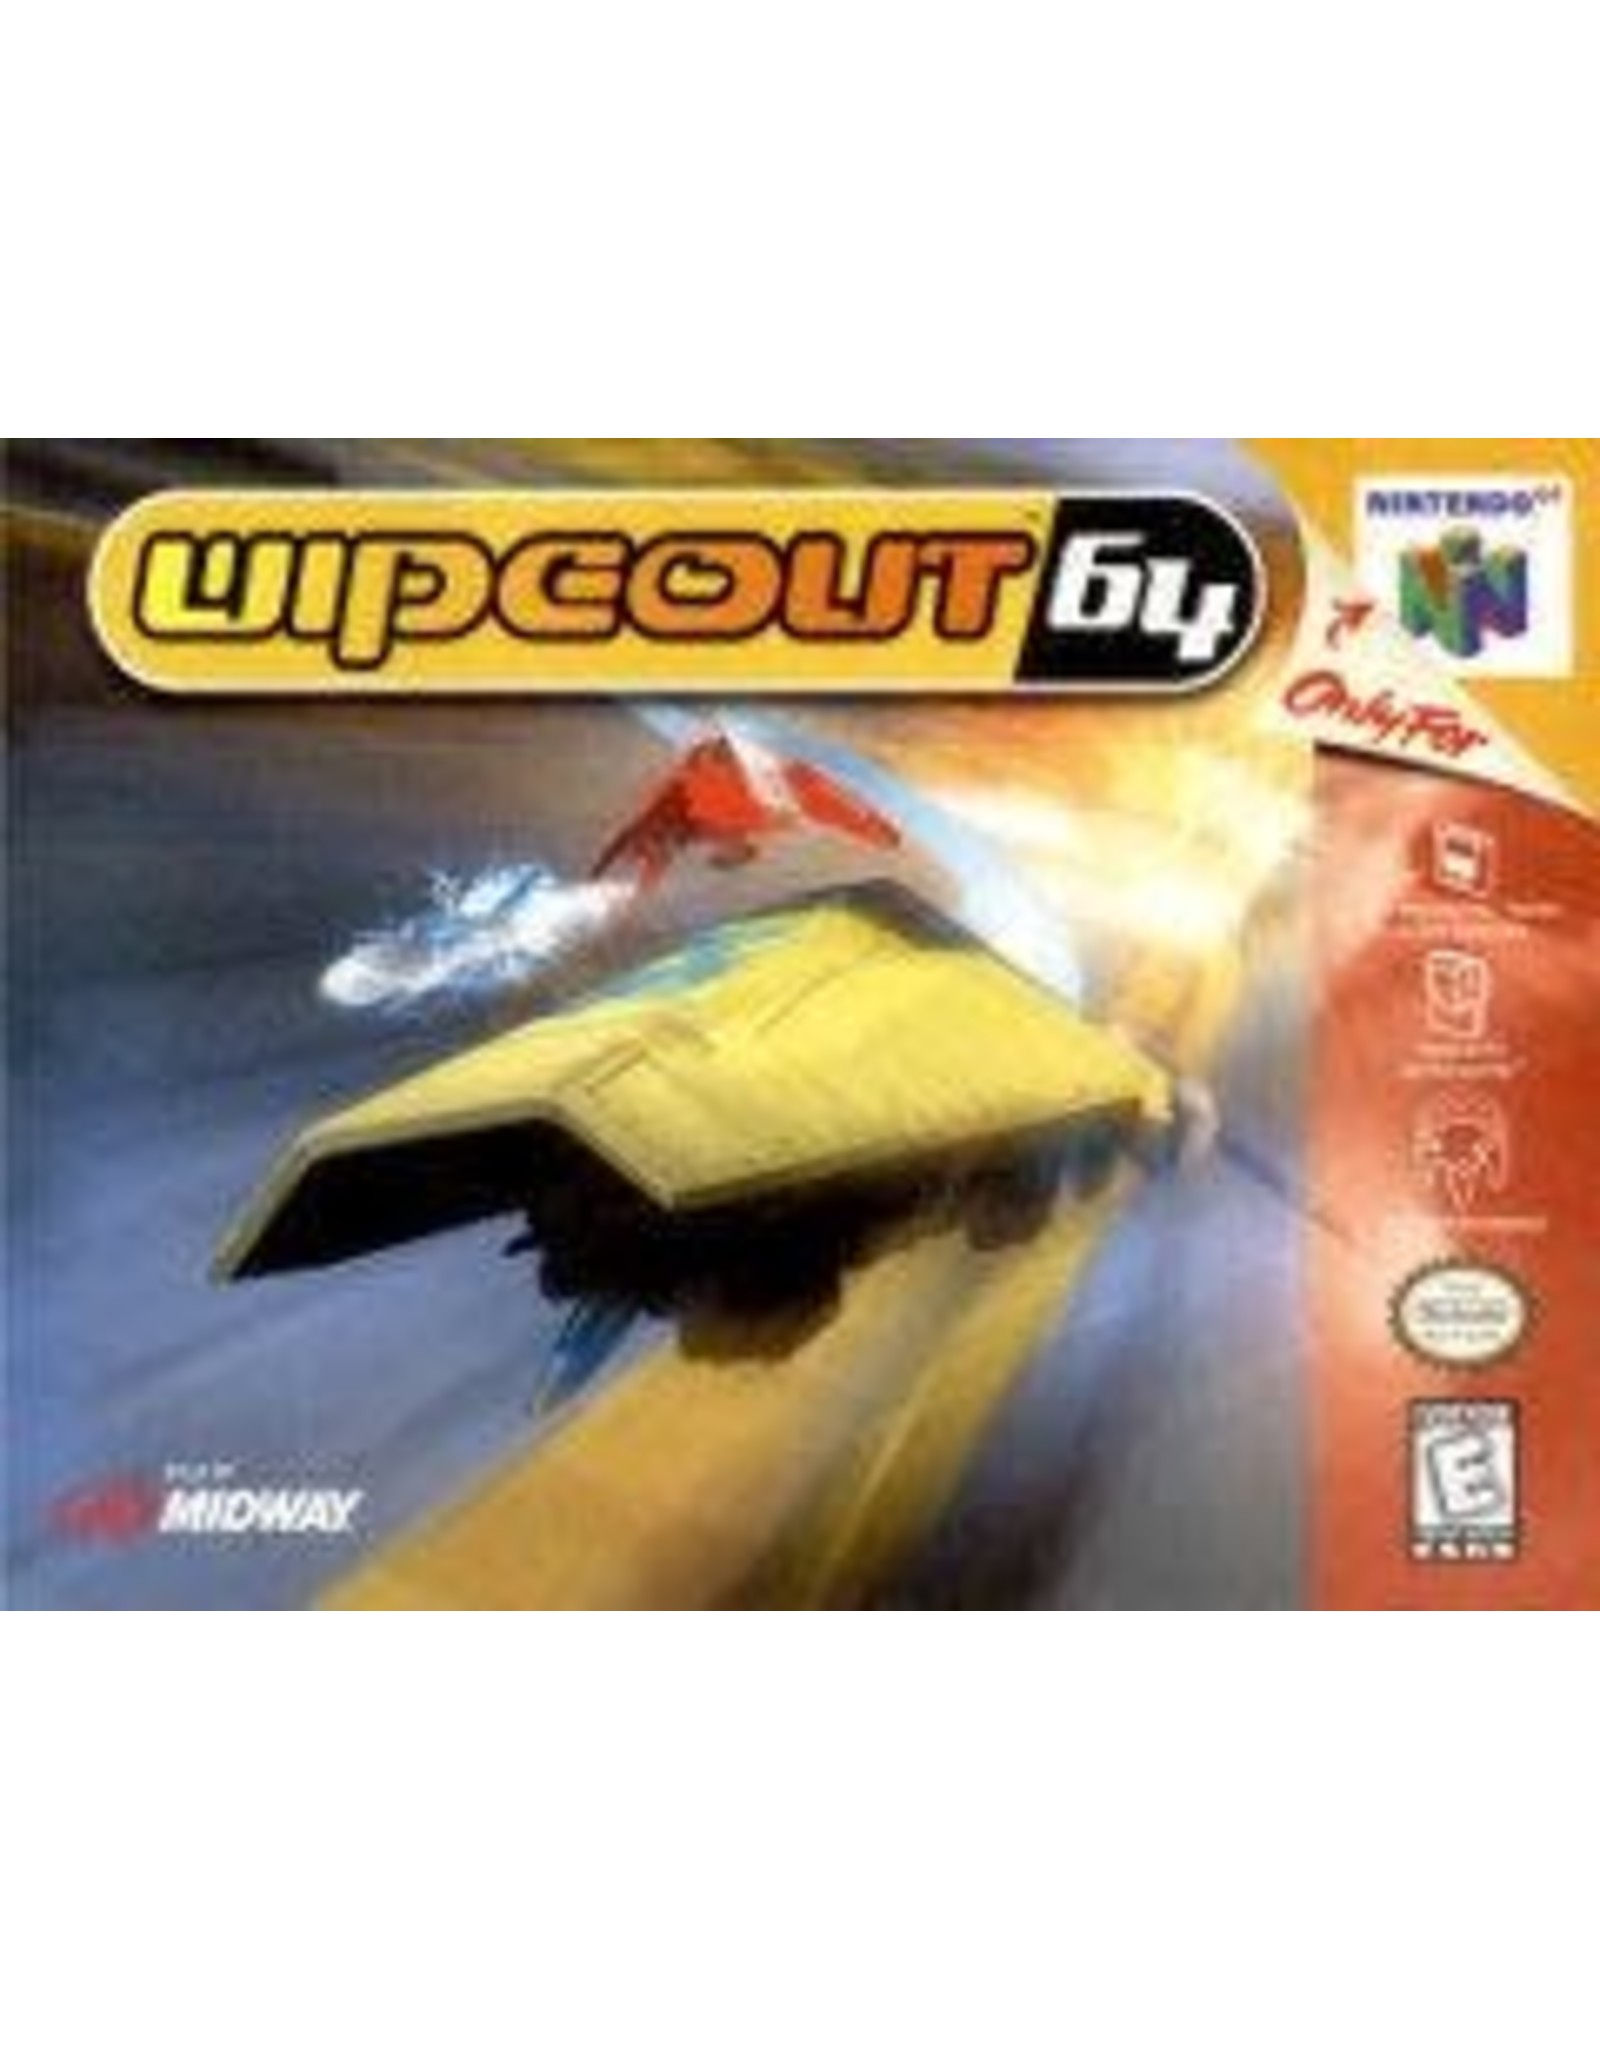 Nintendo 64 Wipeout 64 (Damaged Box, No Manual)